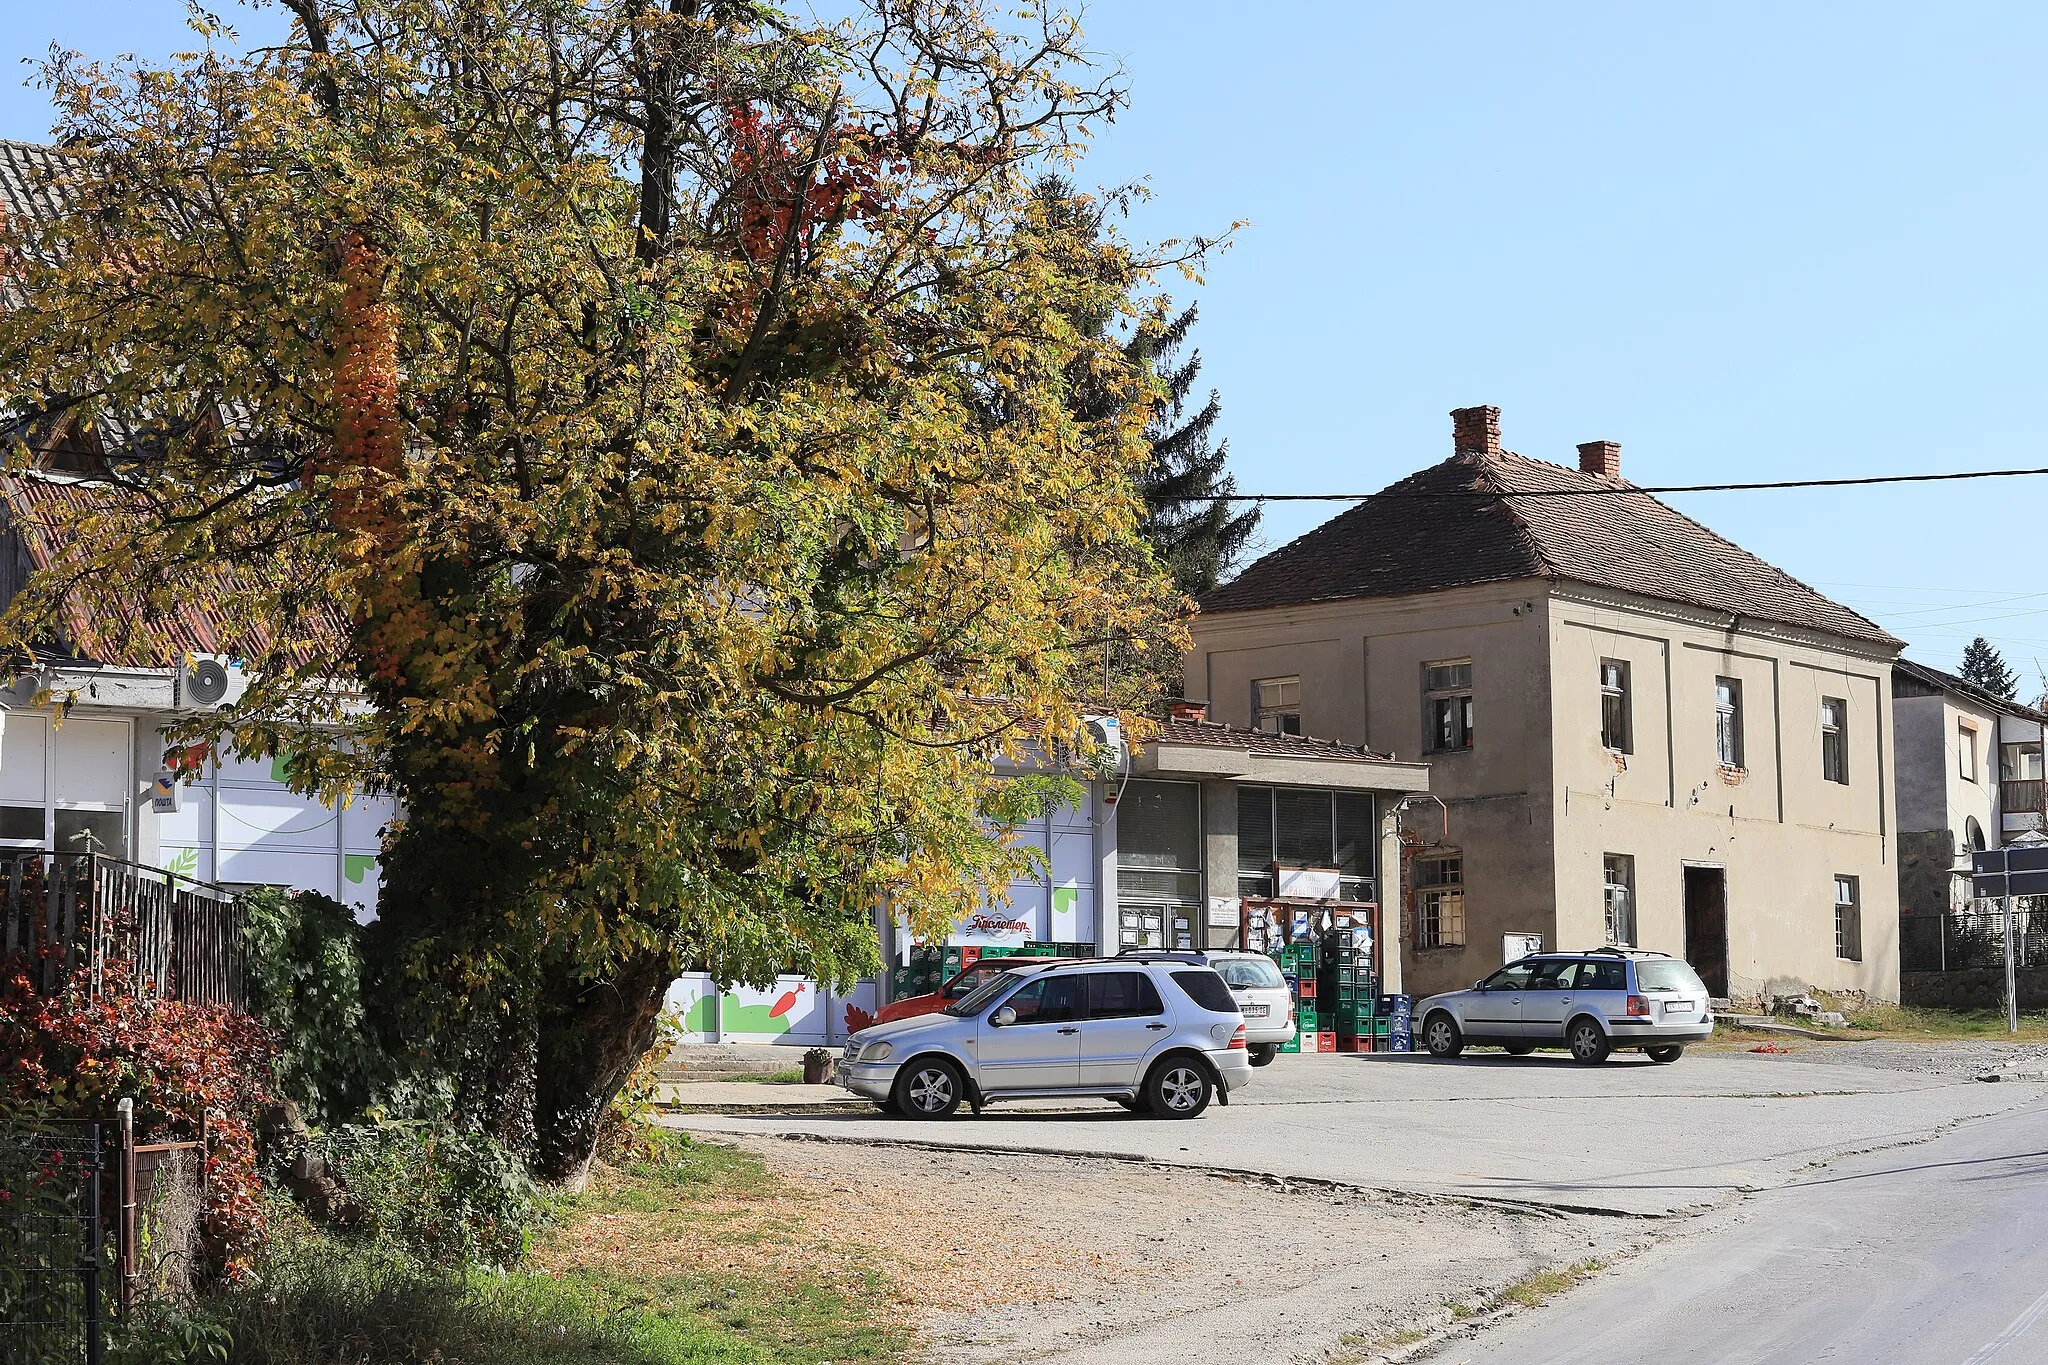 Photo showing: Vracevsnica (Gornji Milanovac Municipality), Serbia.